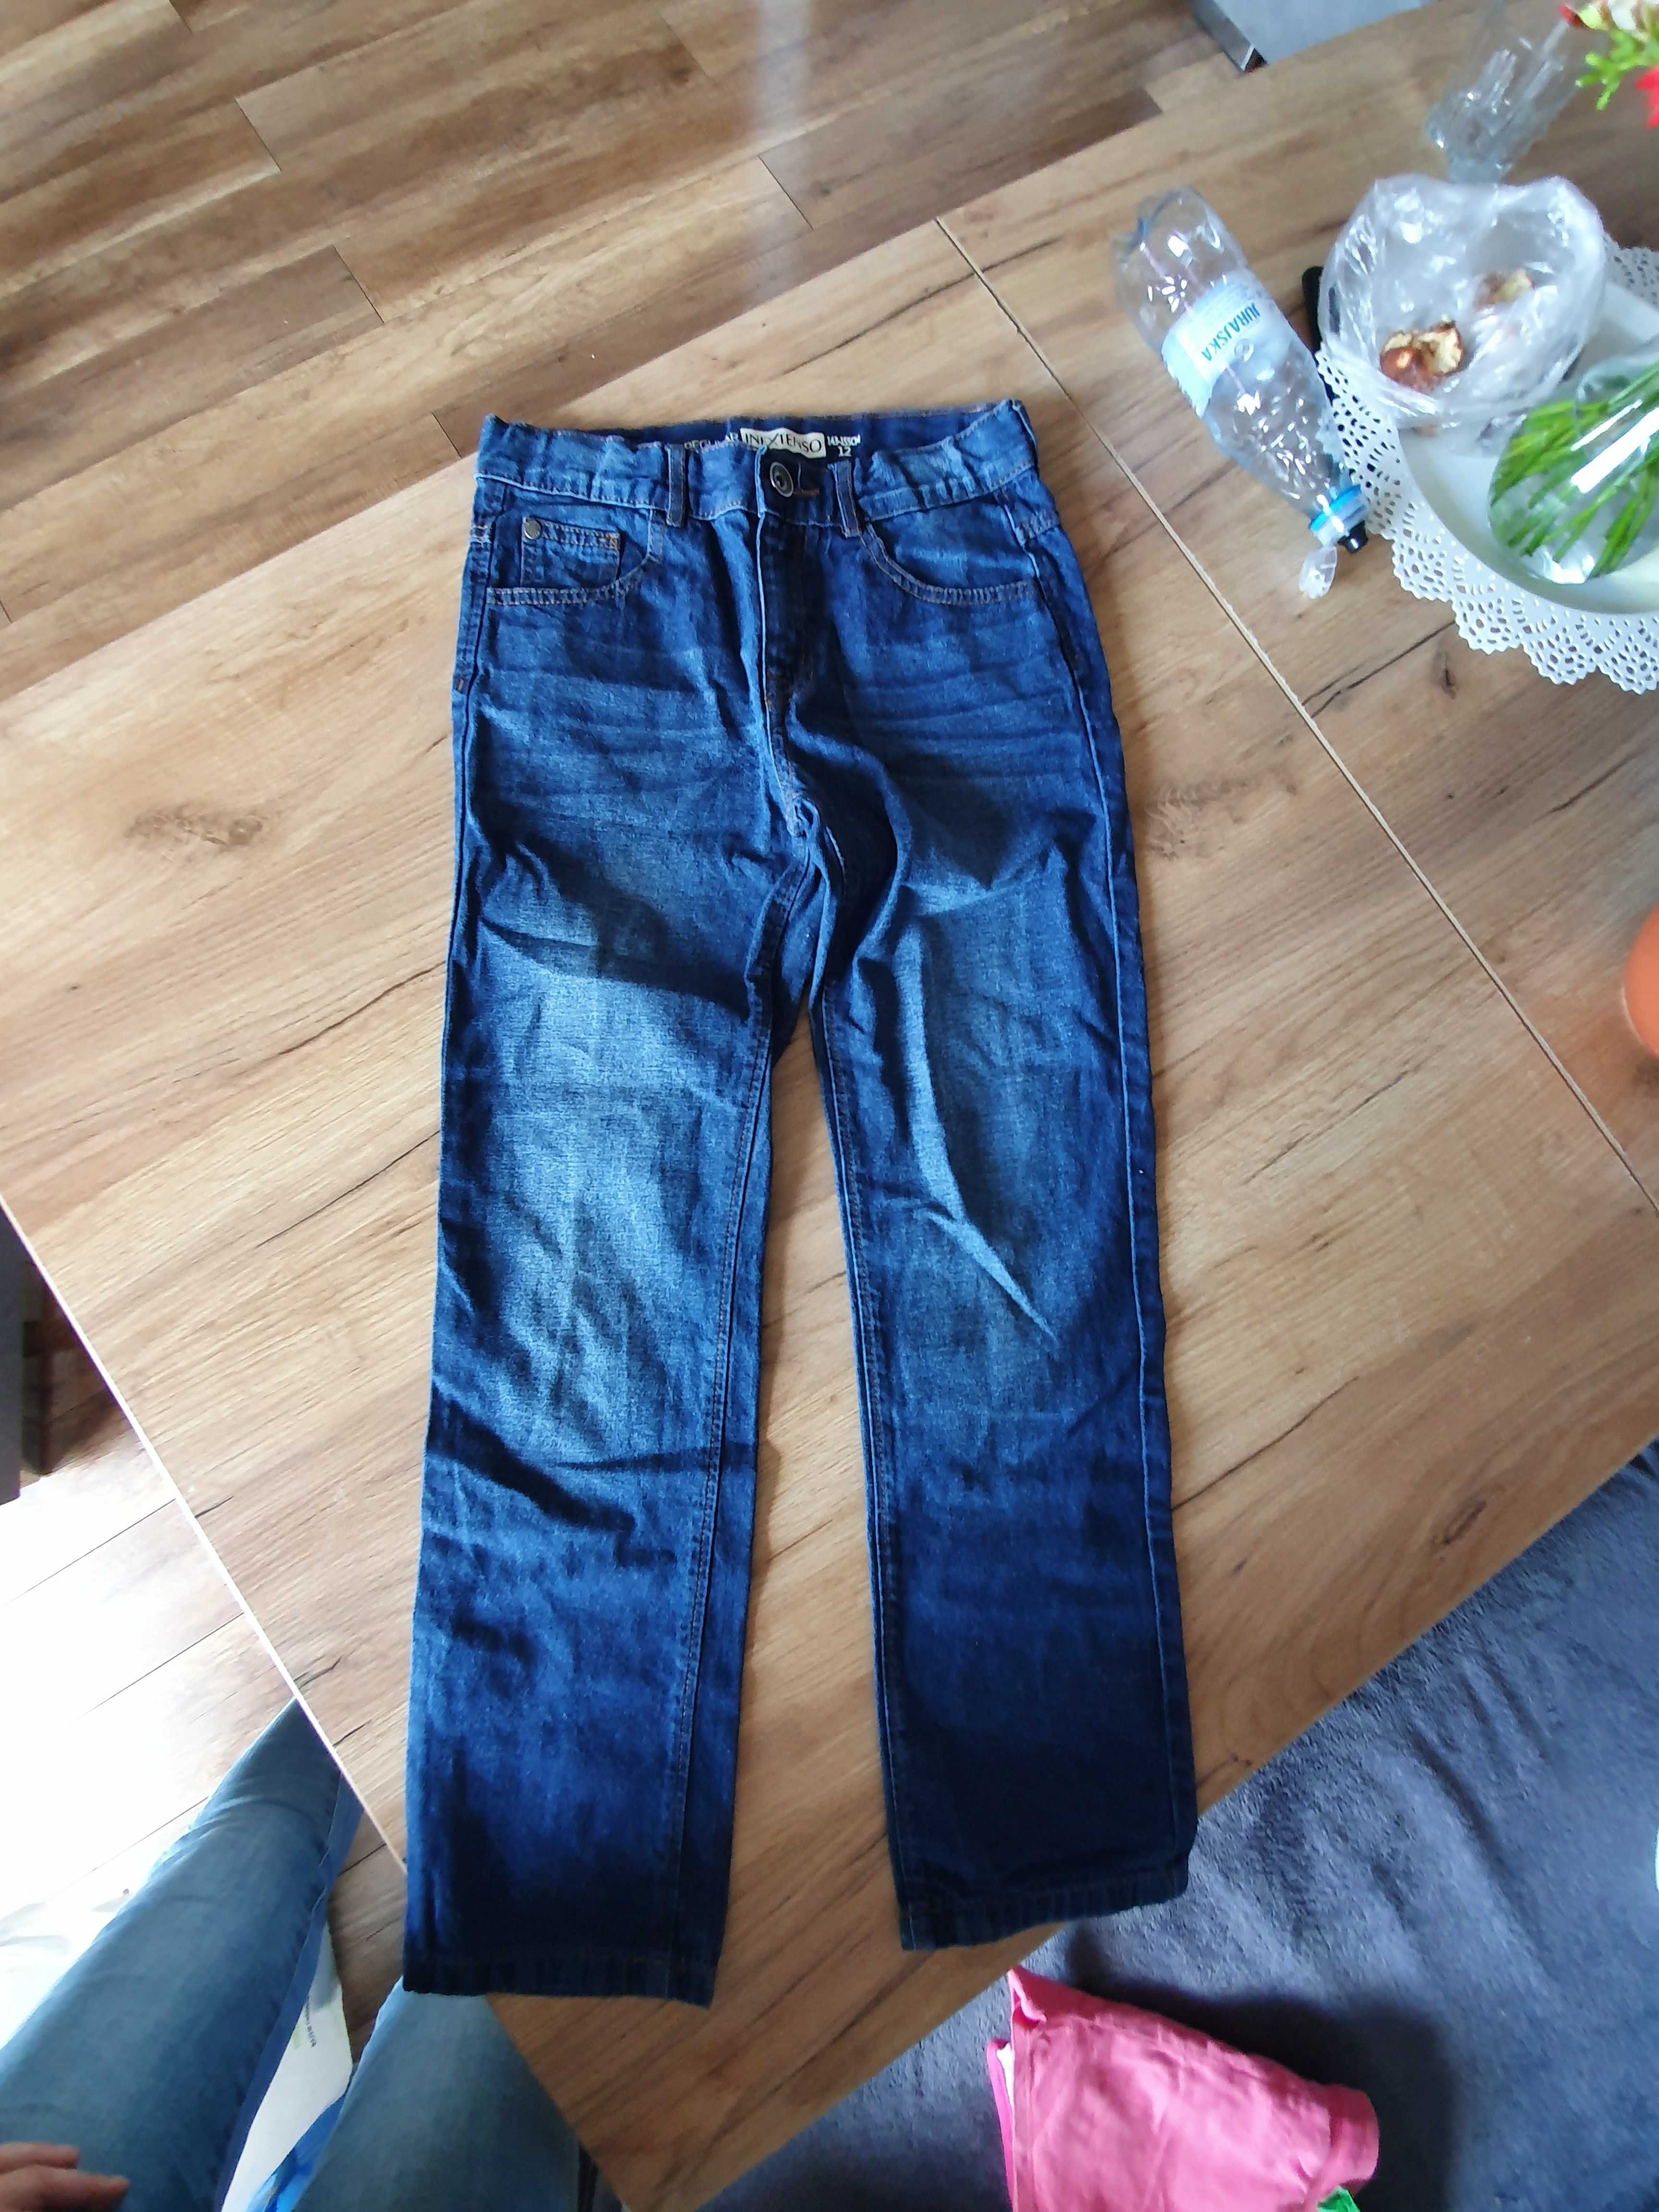 Spodnie damskie jeans Inextenso 143-155 cm